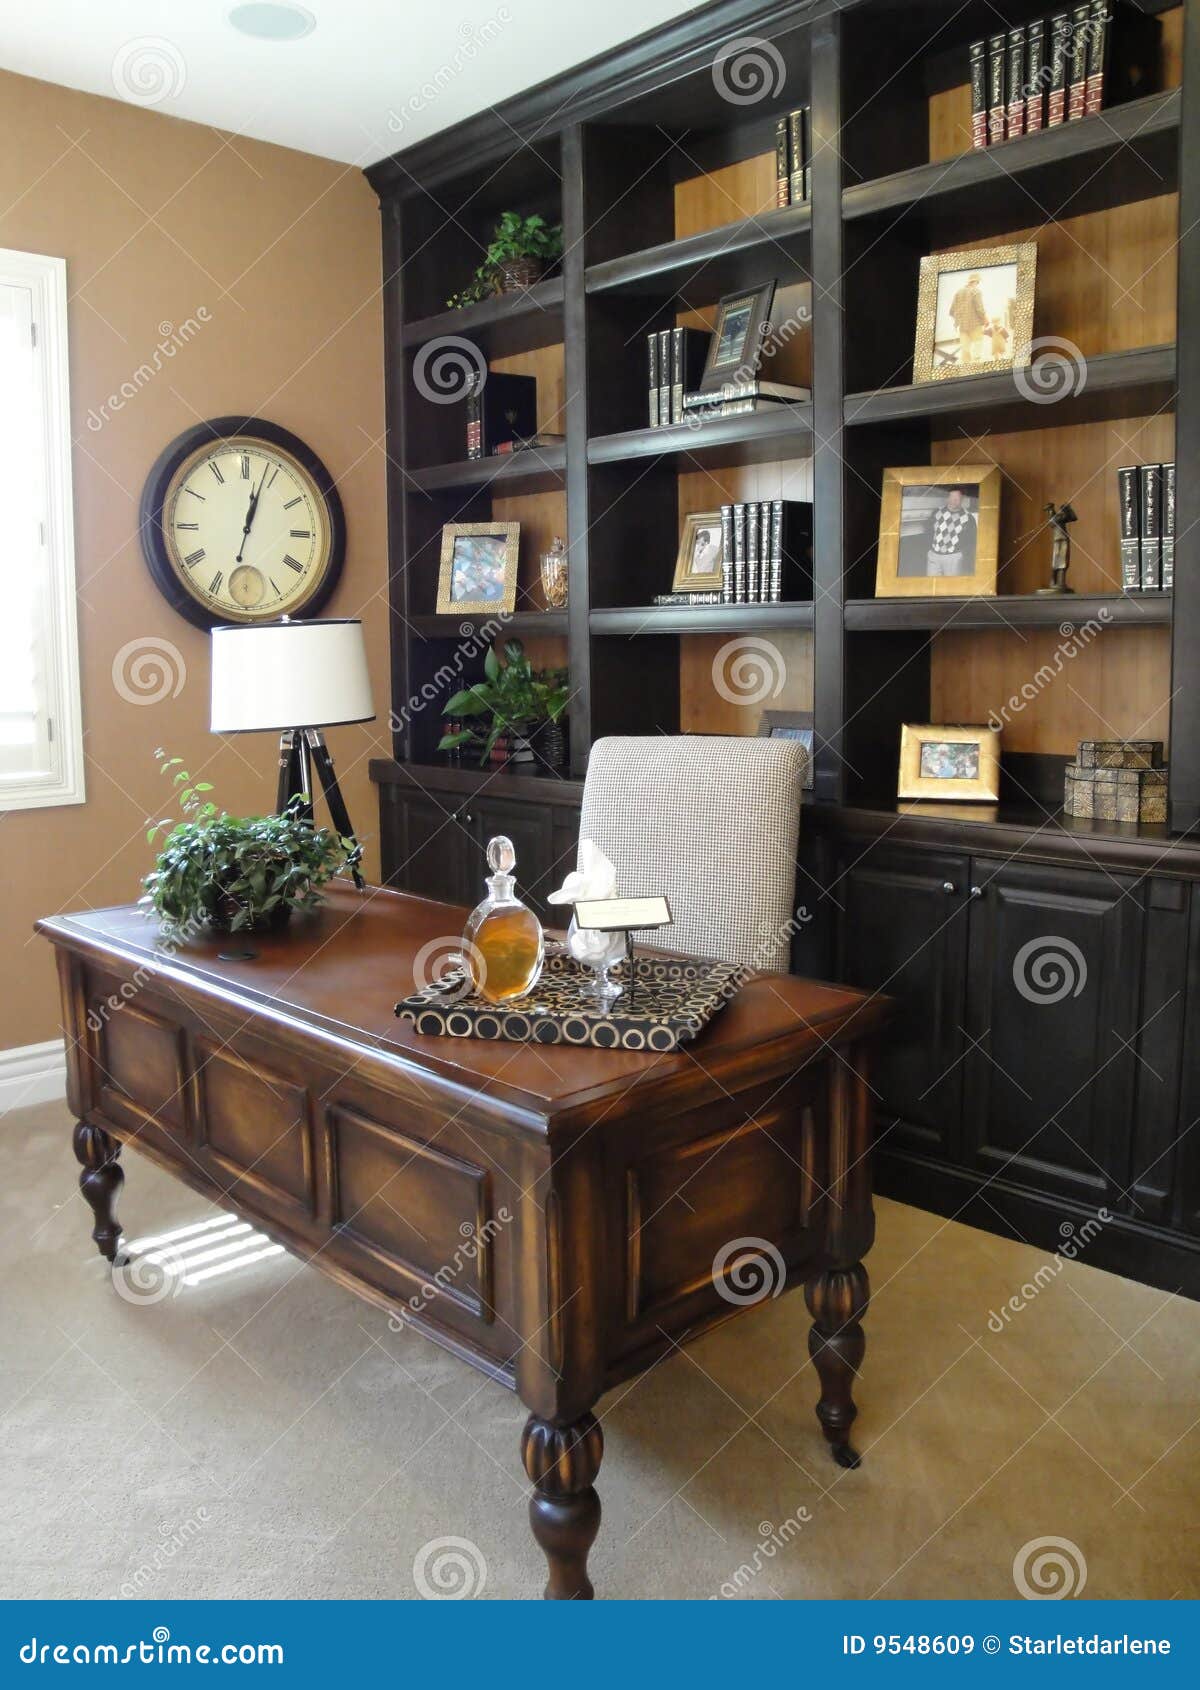 home-office-study-9548609.jpg